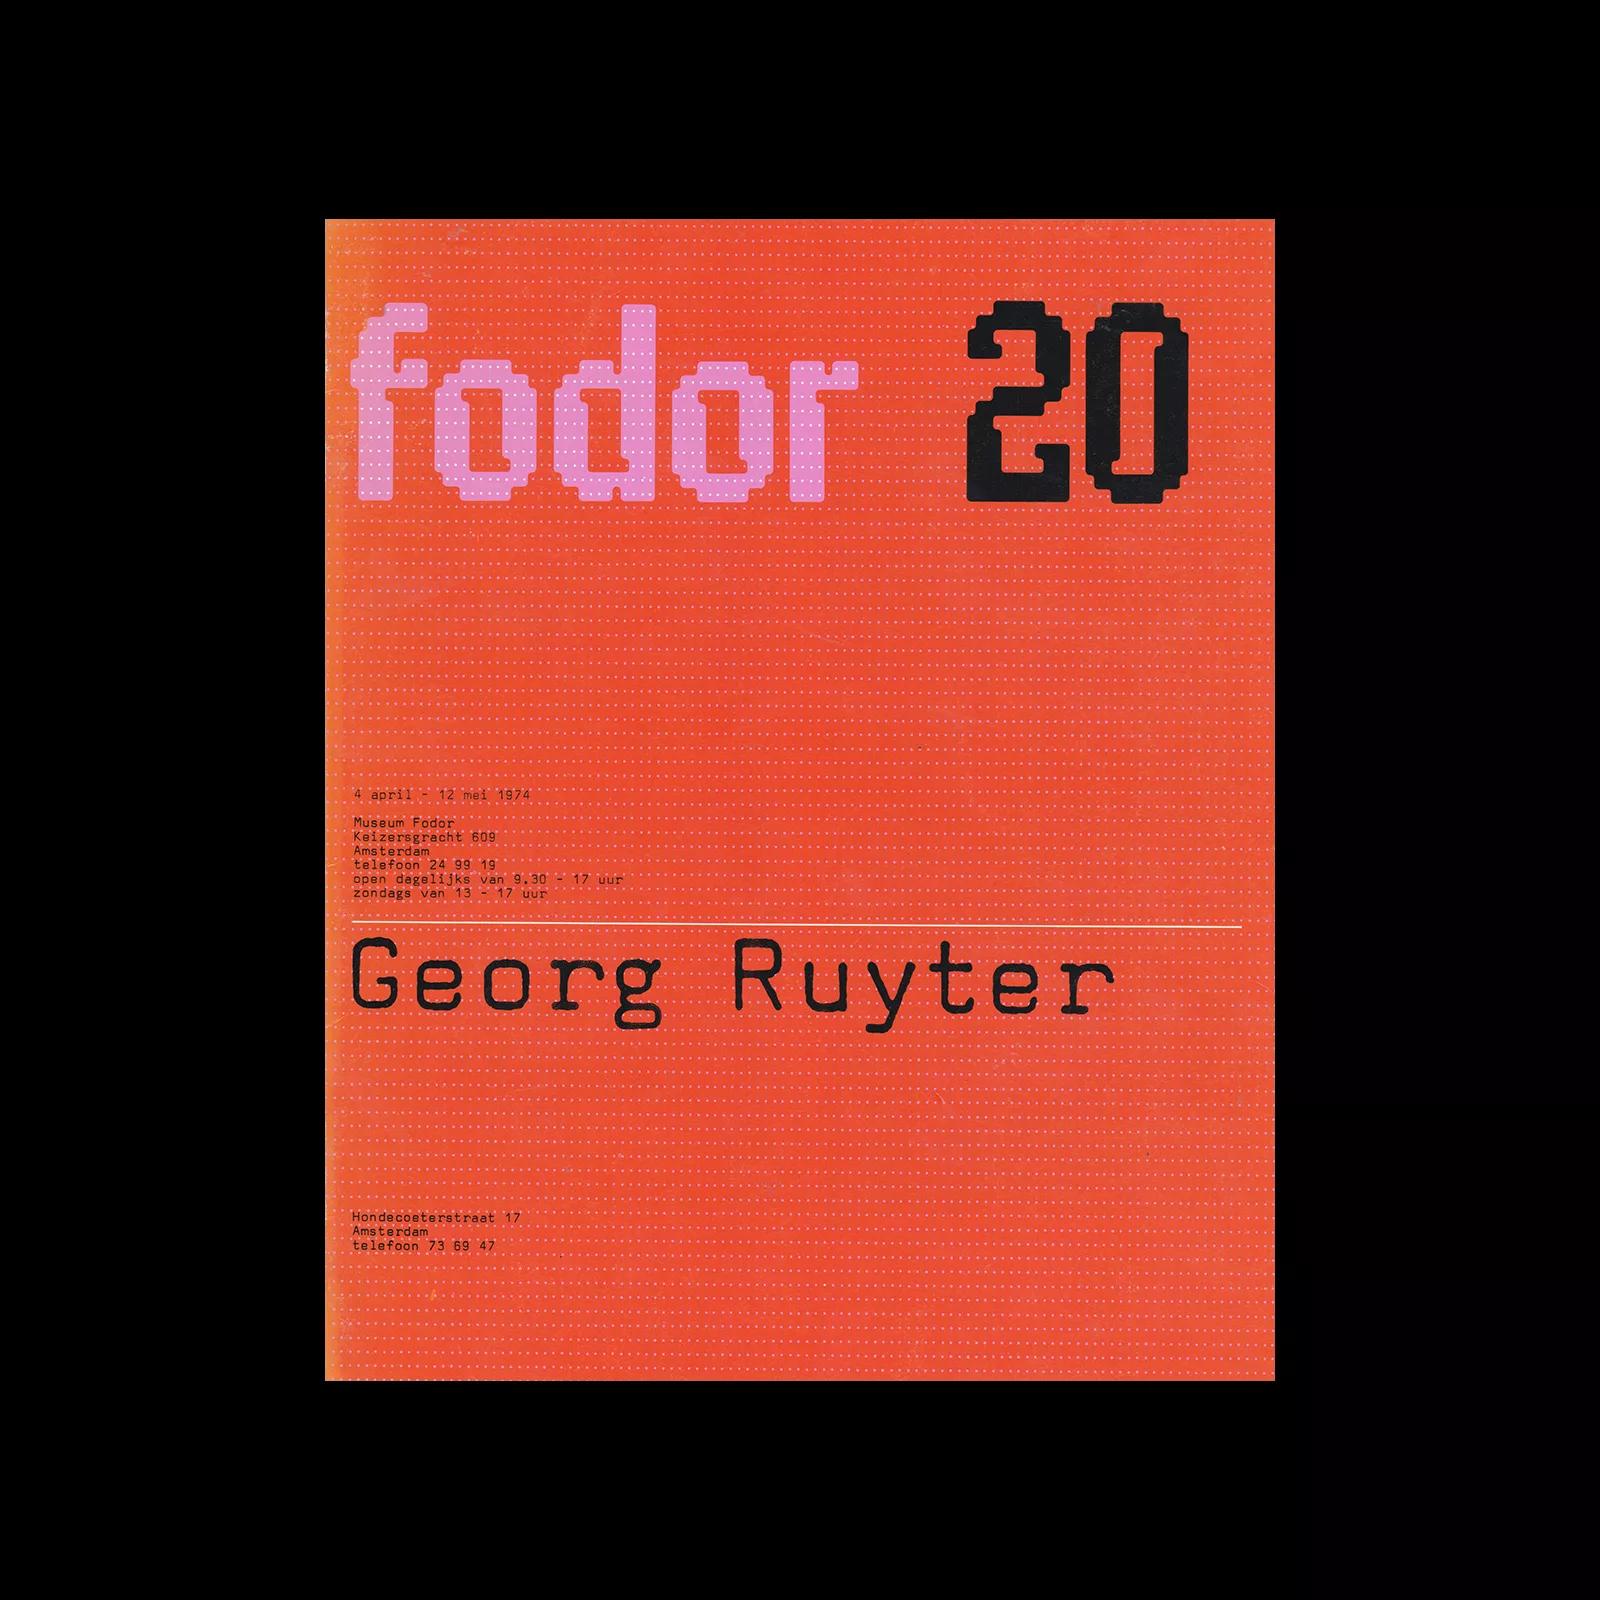 Fodor 20, 1974 - Georg Ruyter. Designed by Wim Crouwel and Daphne Duijvelshoff (Total Design)